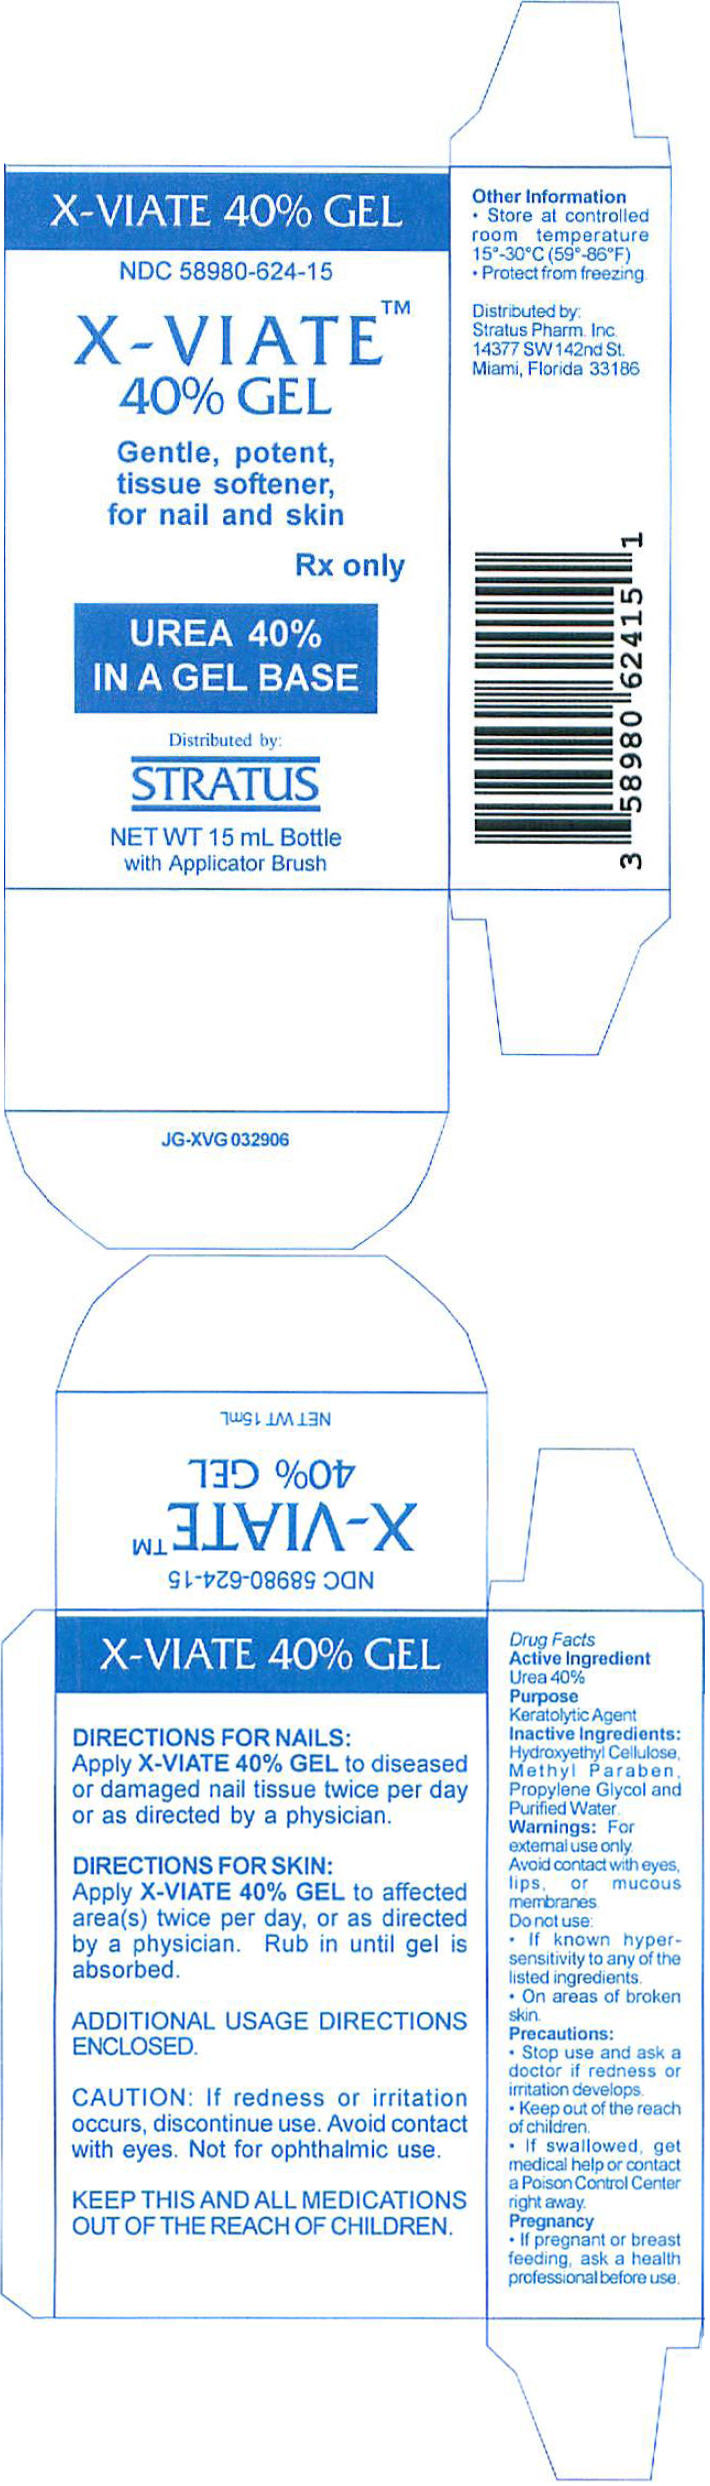 PRINCIPAL DISPLAY PANEL - 15 mL Bottle Carton